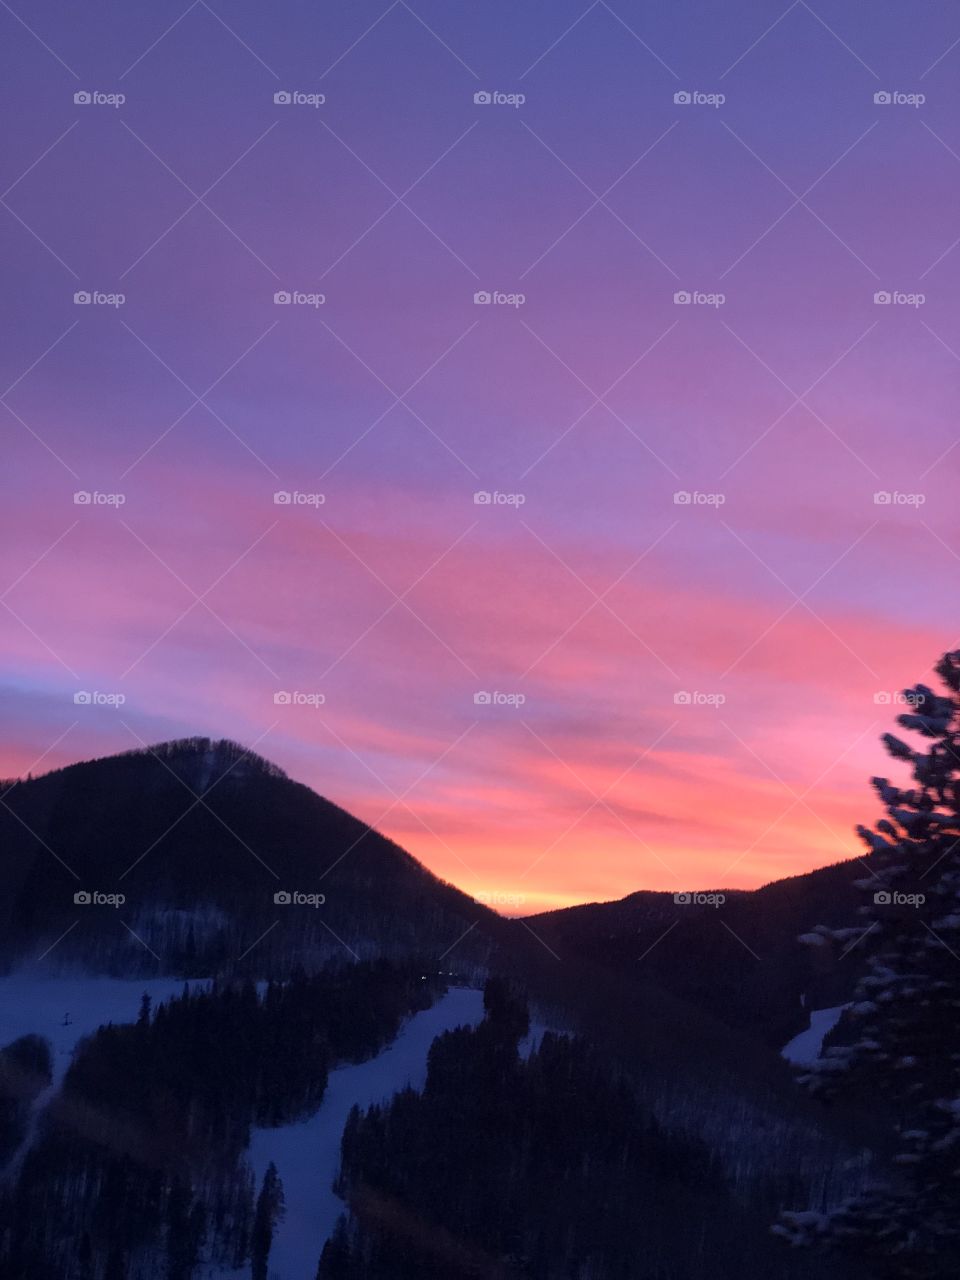 Vail, Colorado sky